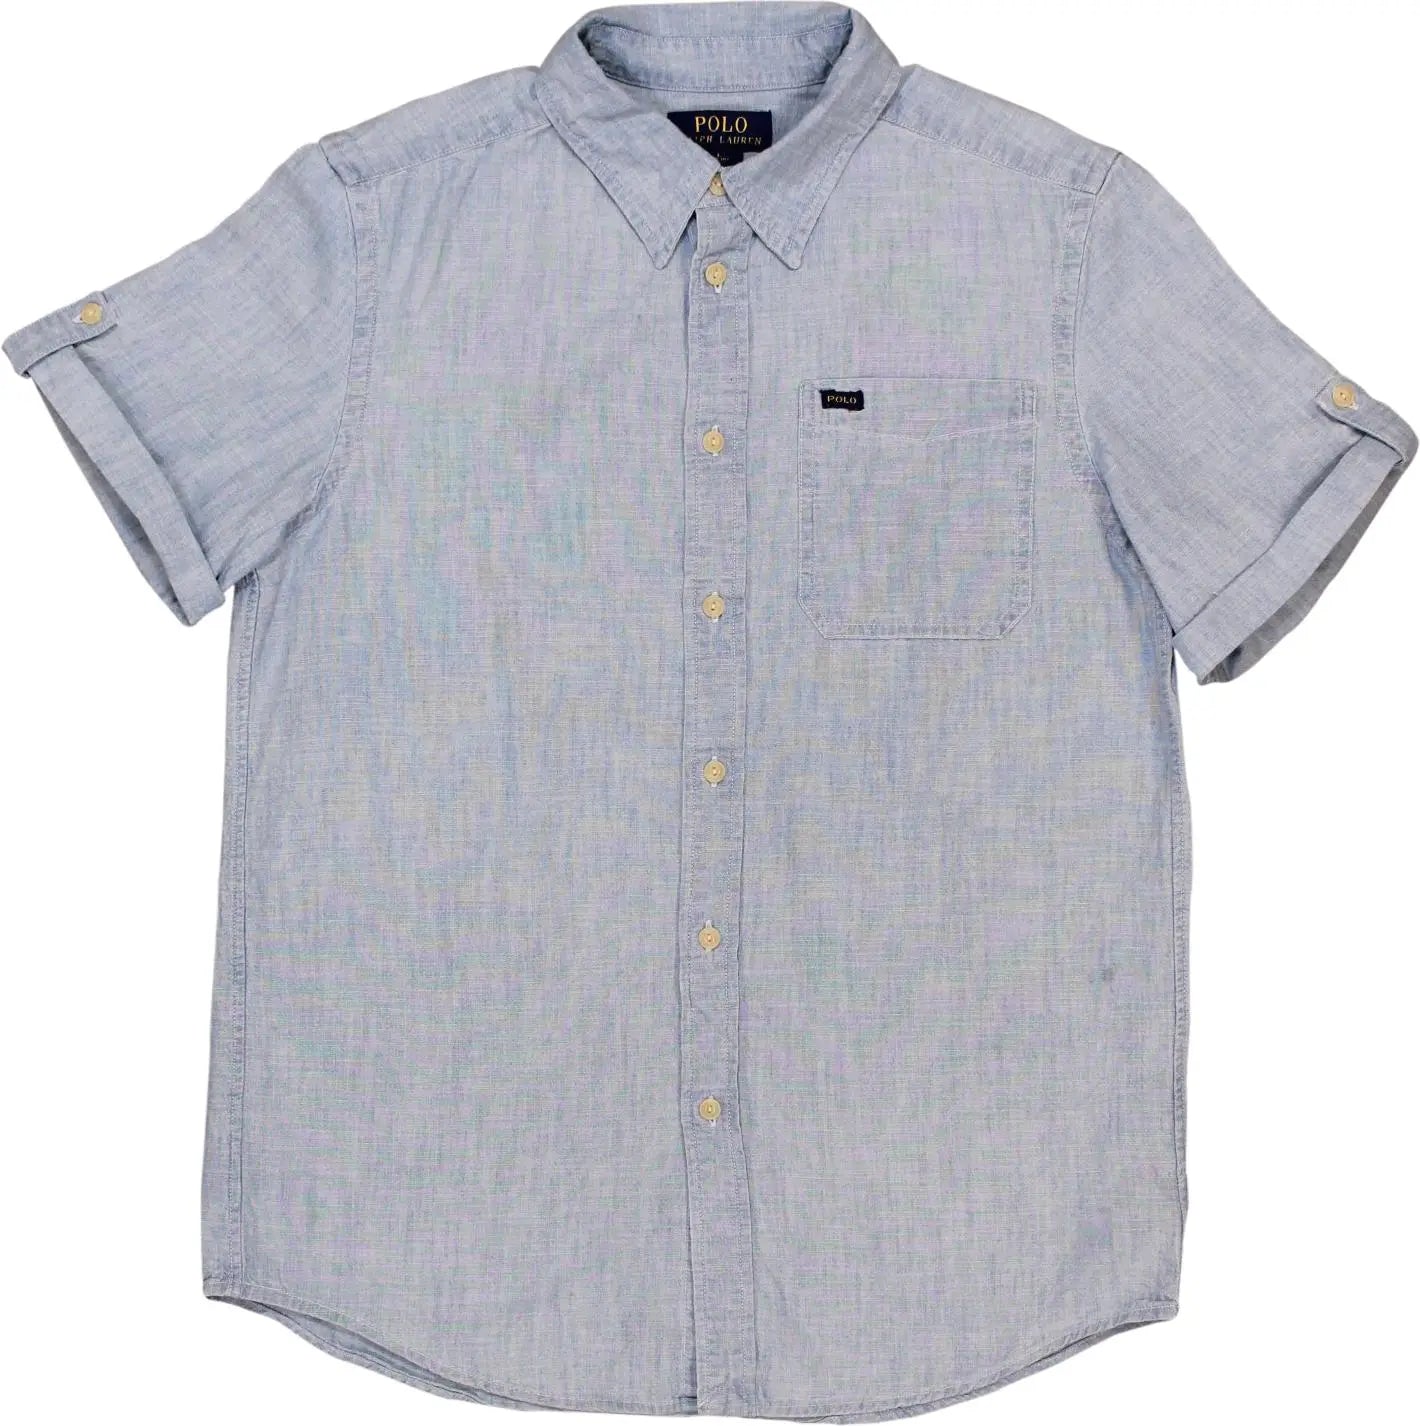 Ralph Lauren - Blue Shirt by Ralph Lauren- ThriftTale.com - Vintage and second handclothing